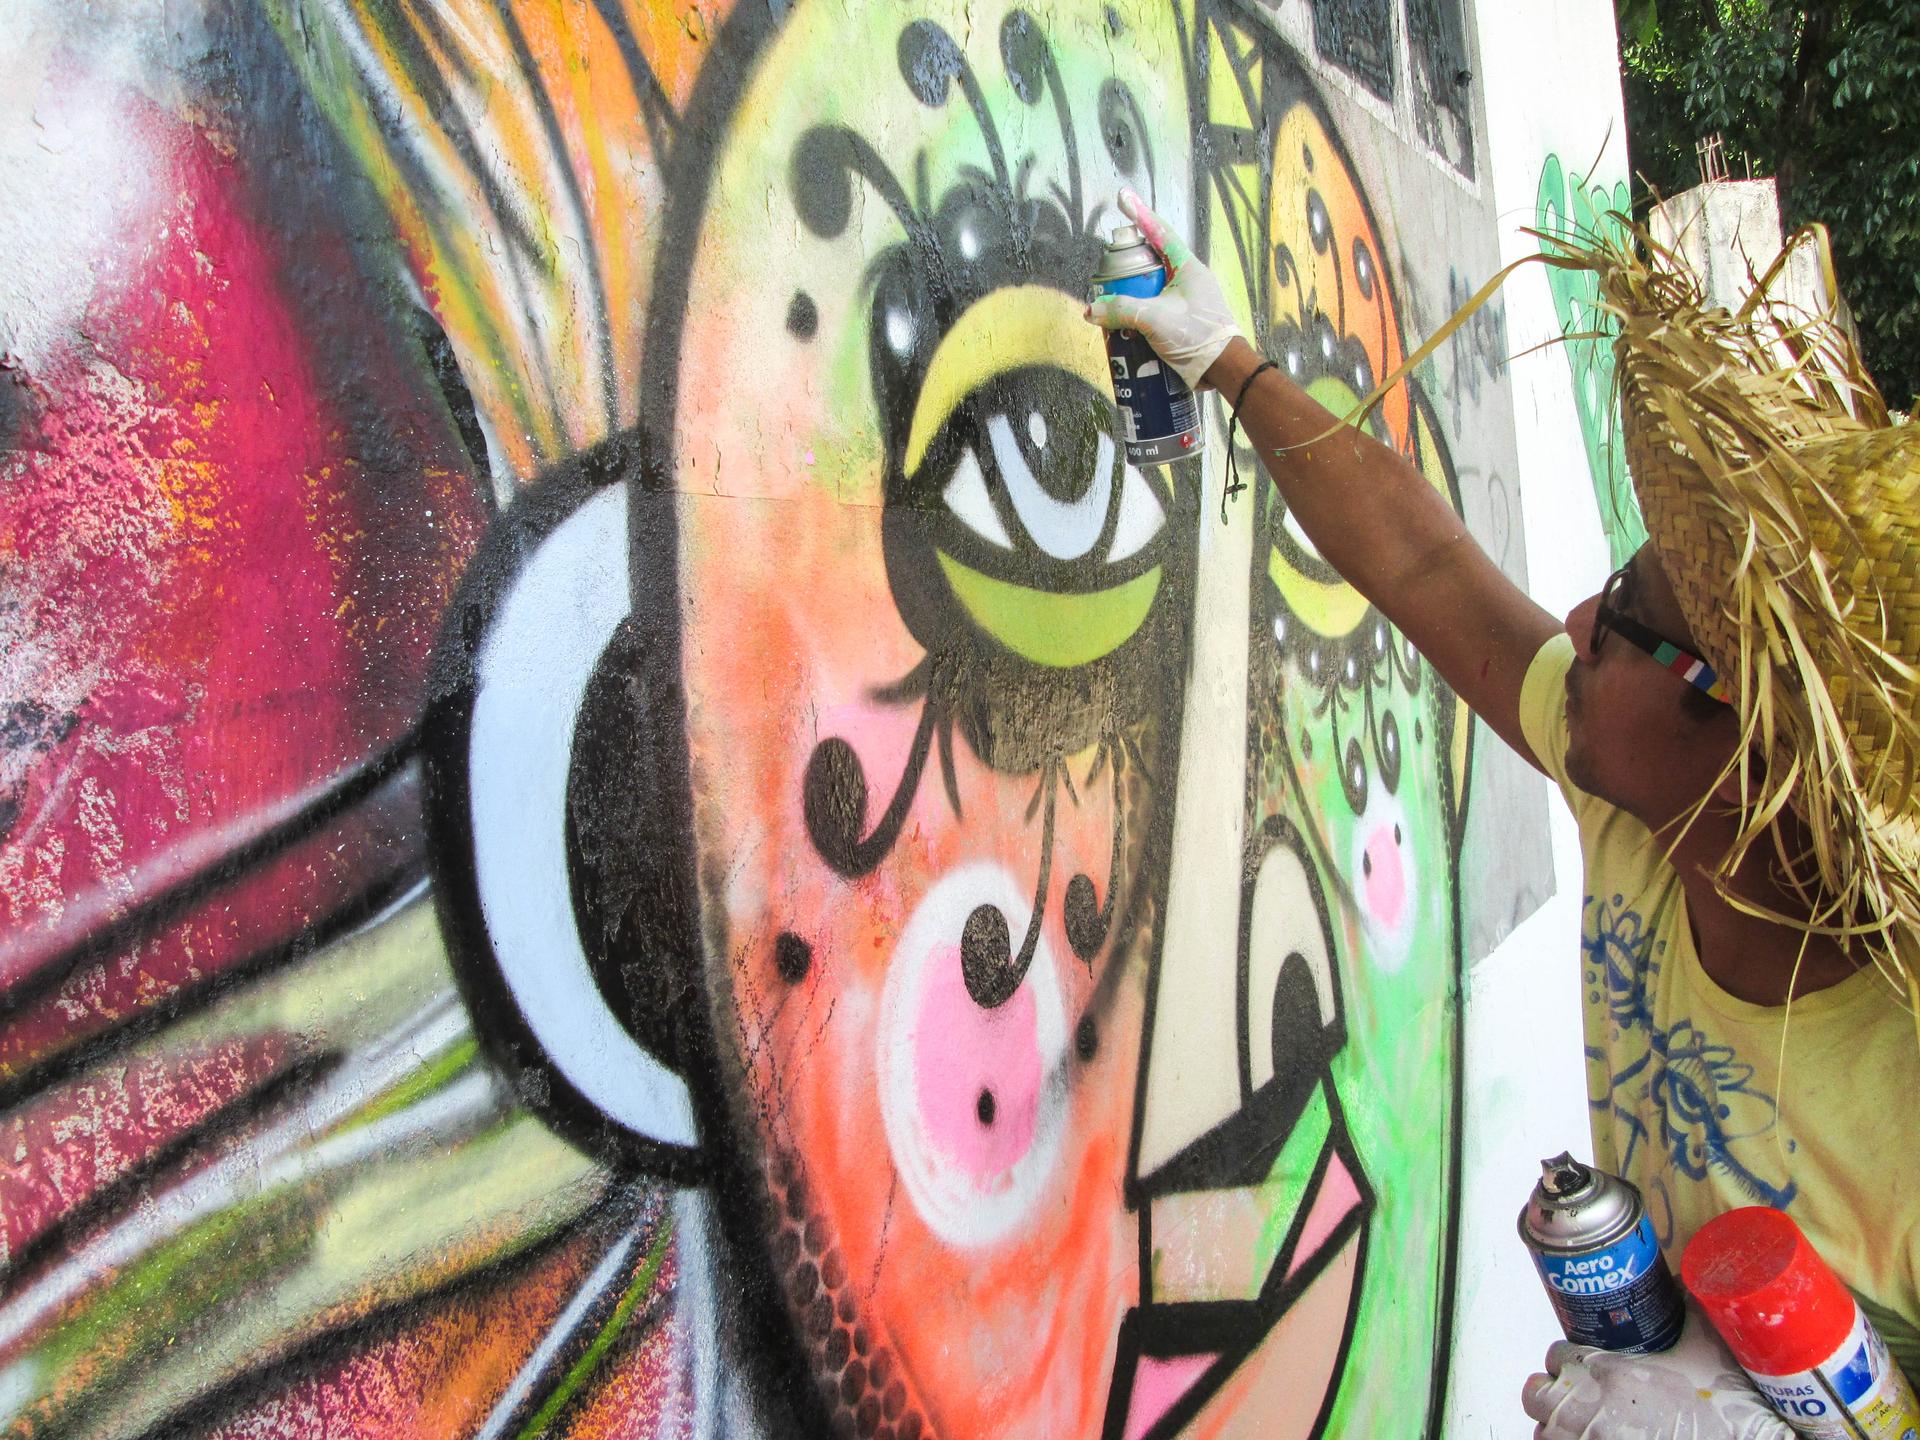 Graffiti artist Rei Blinky at work in San Pedro Sula, Honduras.